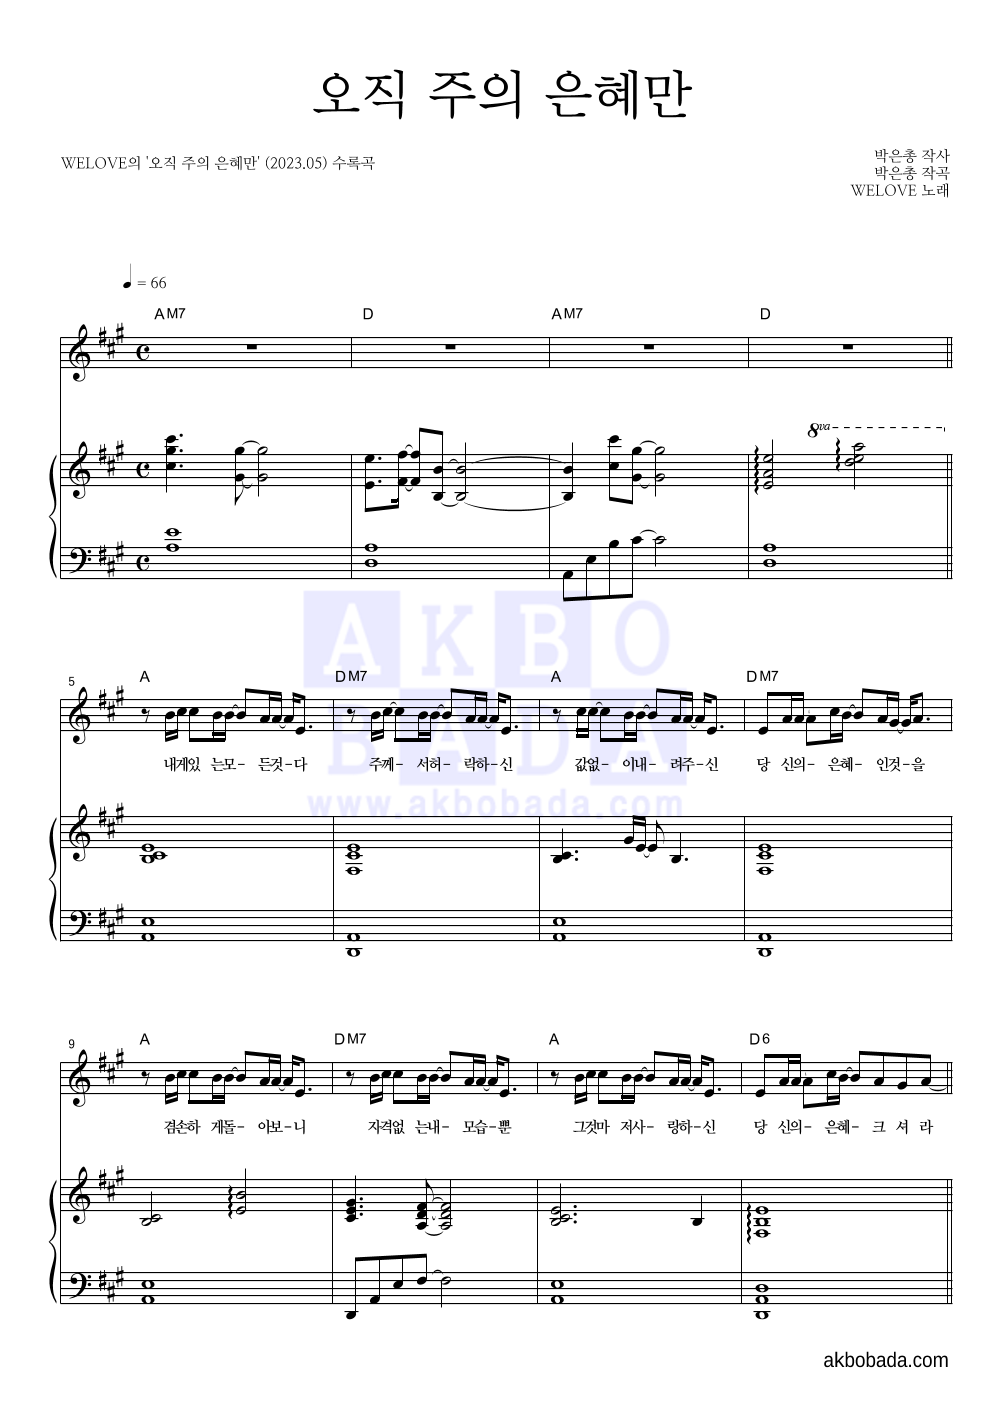 WELOVE - 오직 주의 은혜만 피아노 3단 악보 